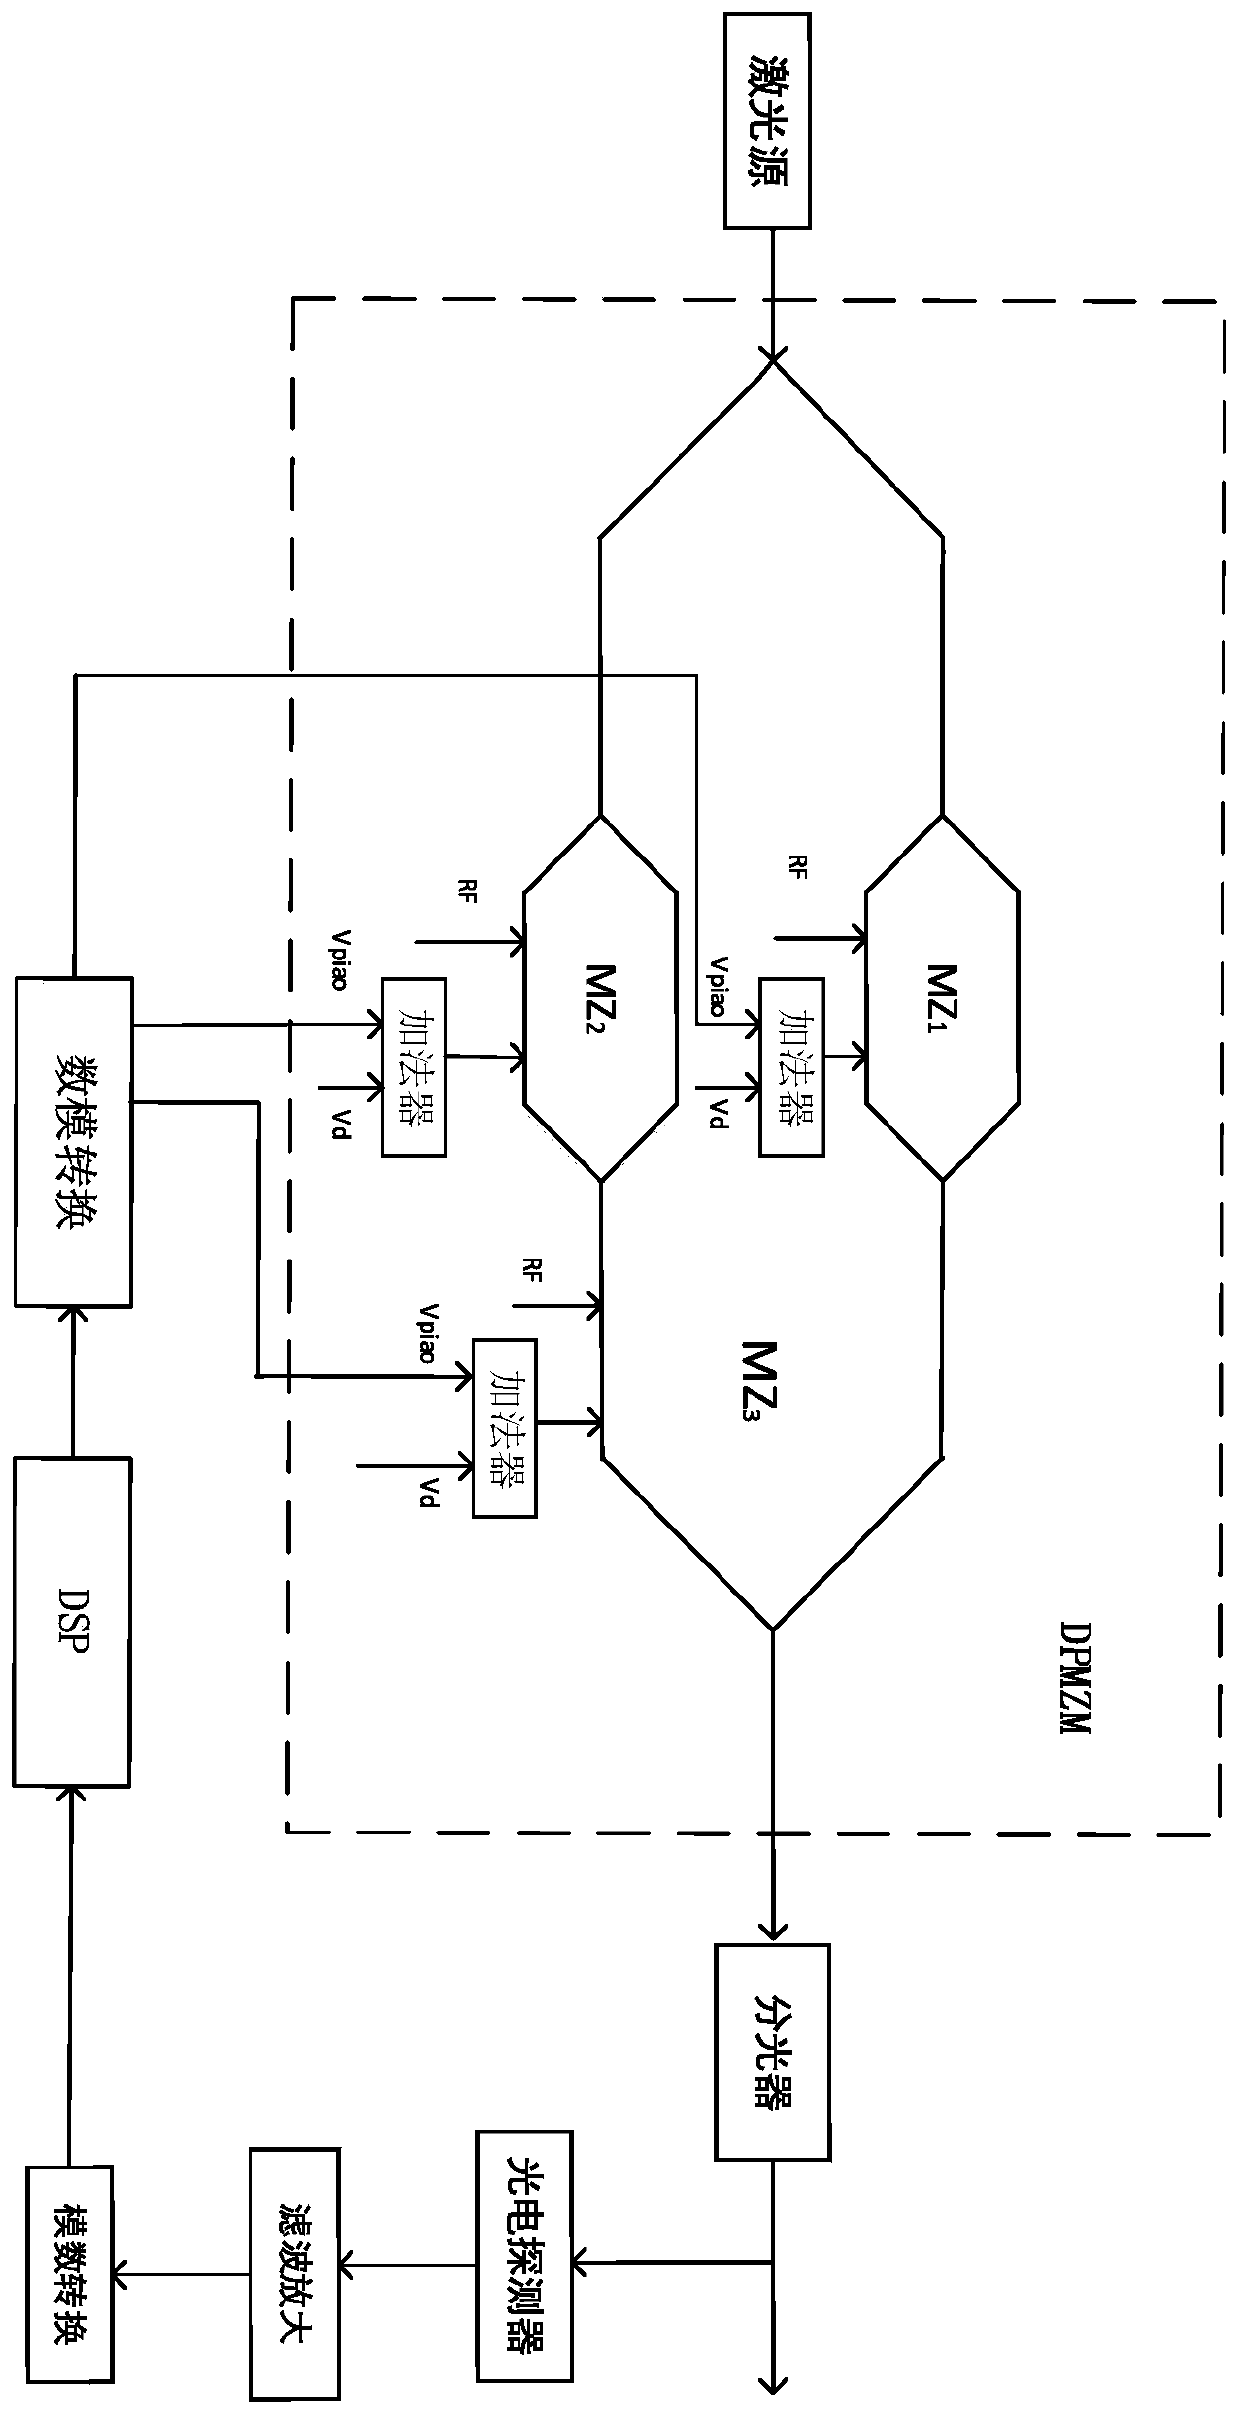 Bias voltage control method based on double parallel Mach-Zehnder modulator